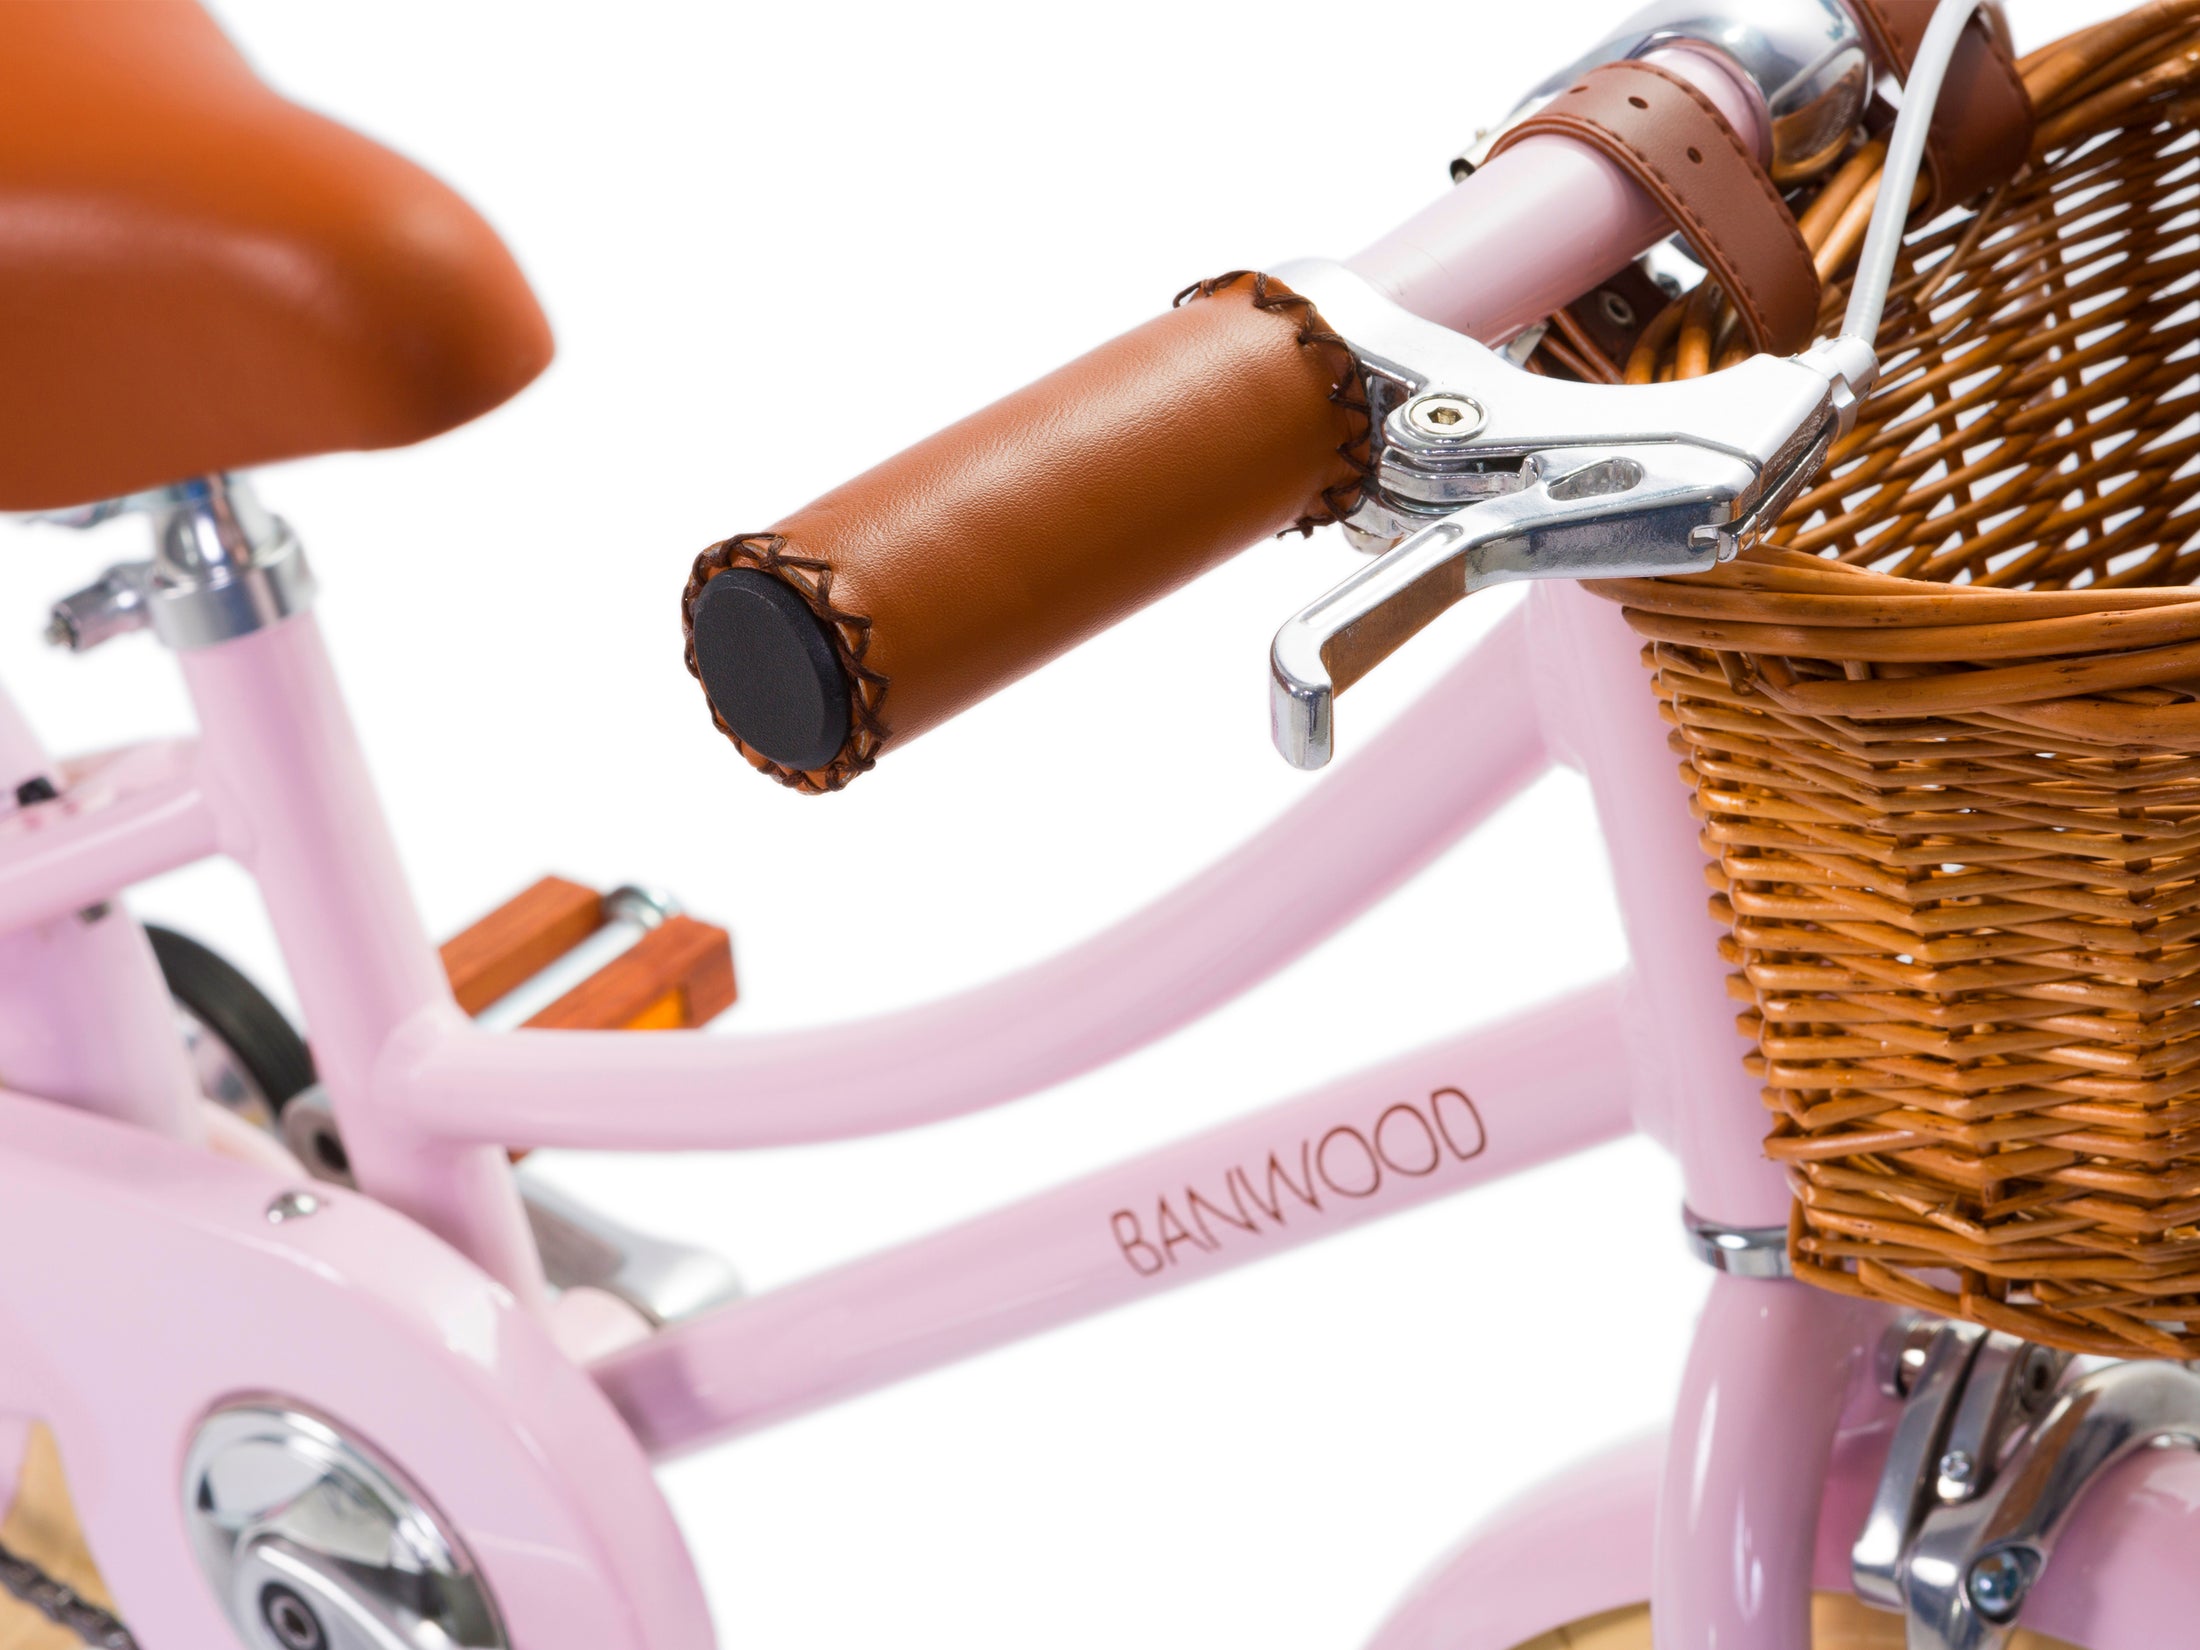 kids banwood bike pink